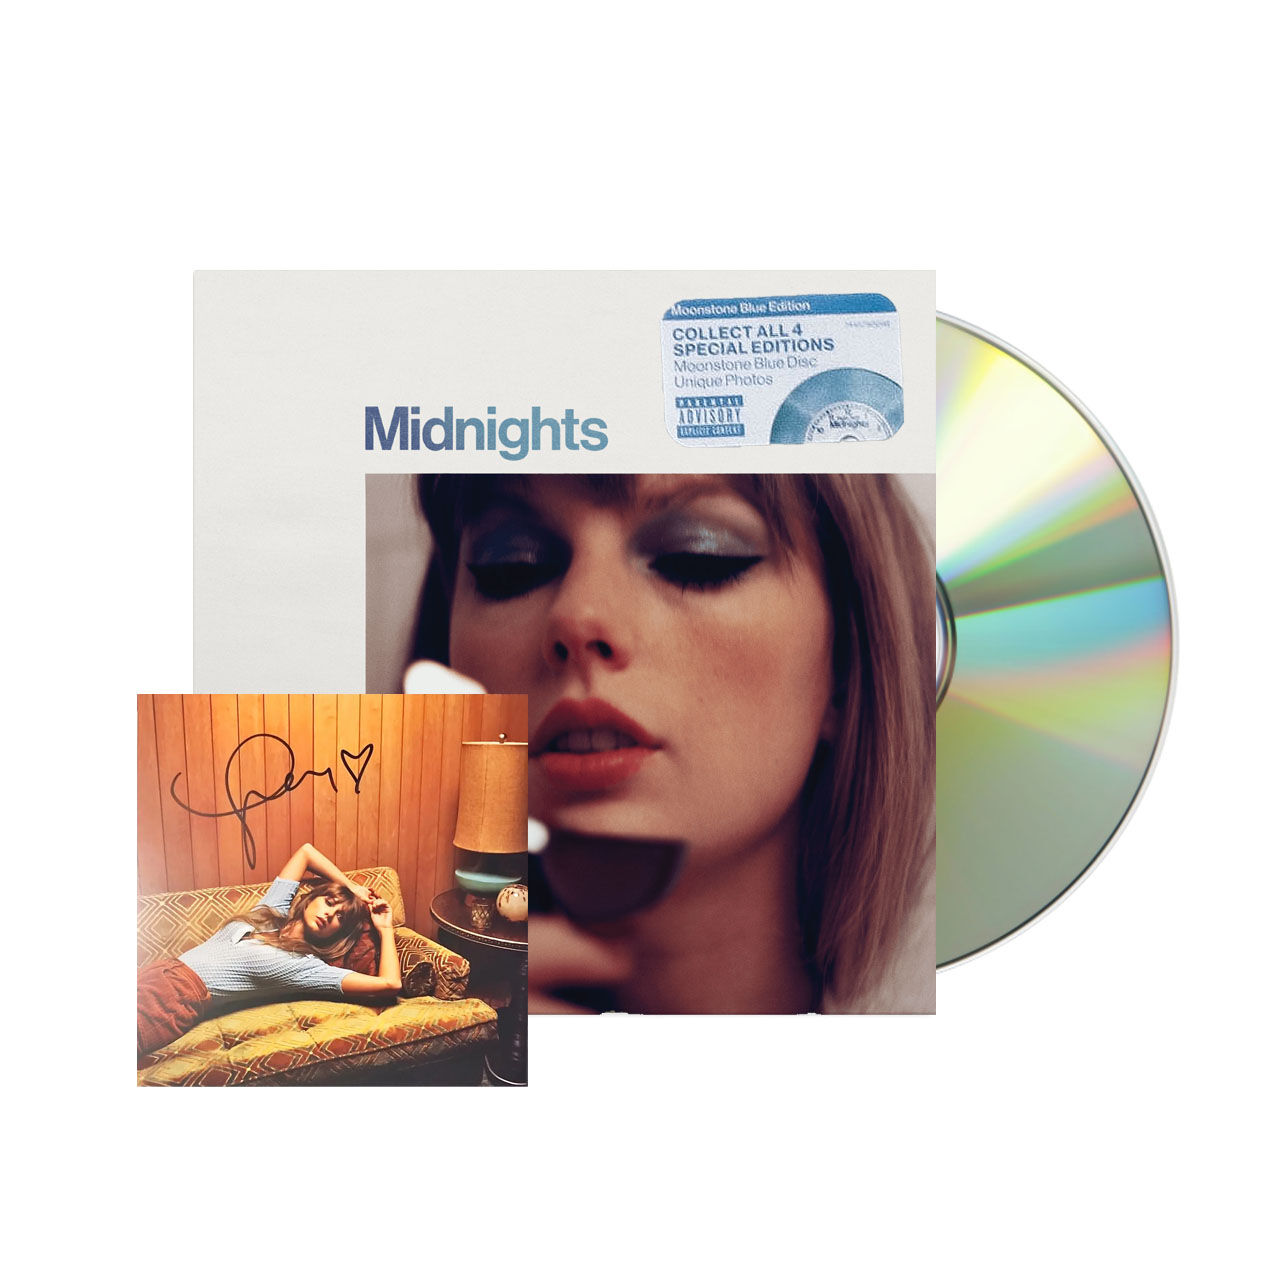 TAYLOR SWIFT Midnights: Moonstone Blue Edition Signed CD